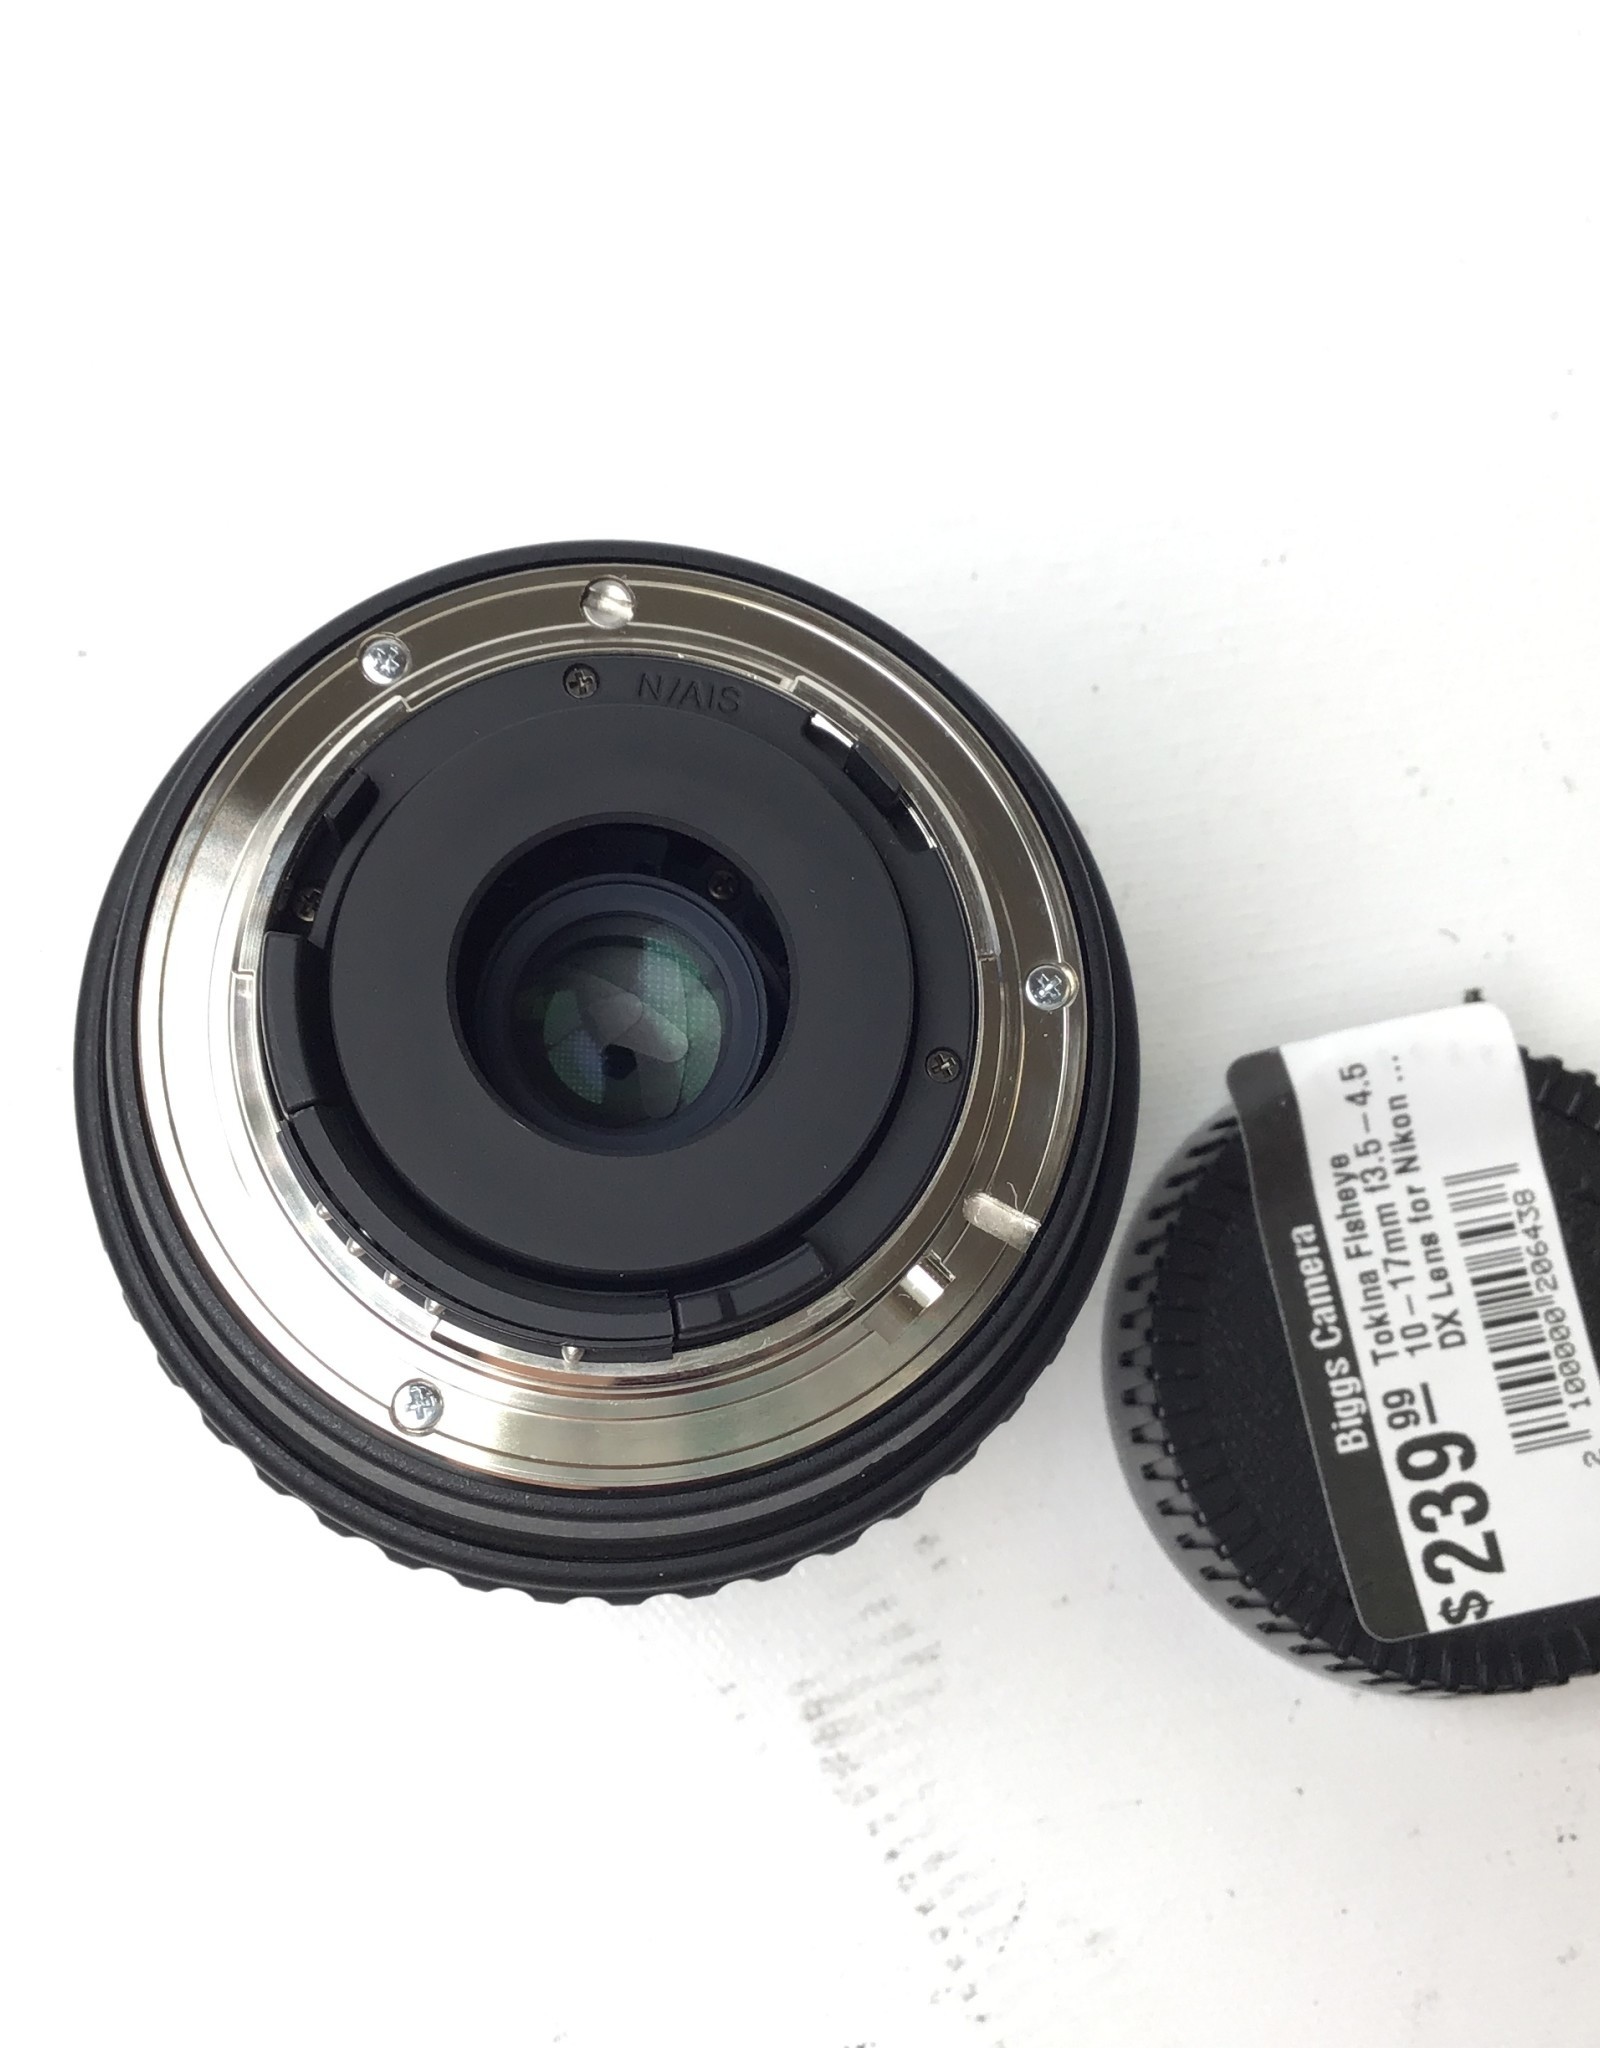 Tokina Tokina Fisheye 10-17mm f3.5-4.5 DX Lens for Nikon Used EX